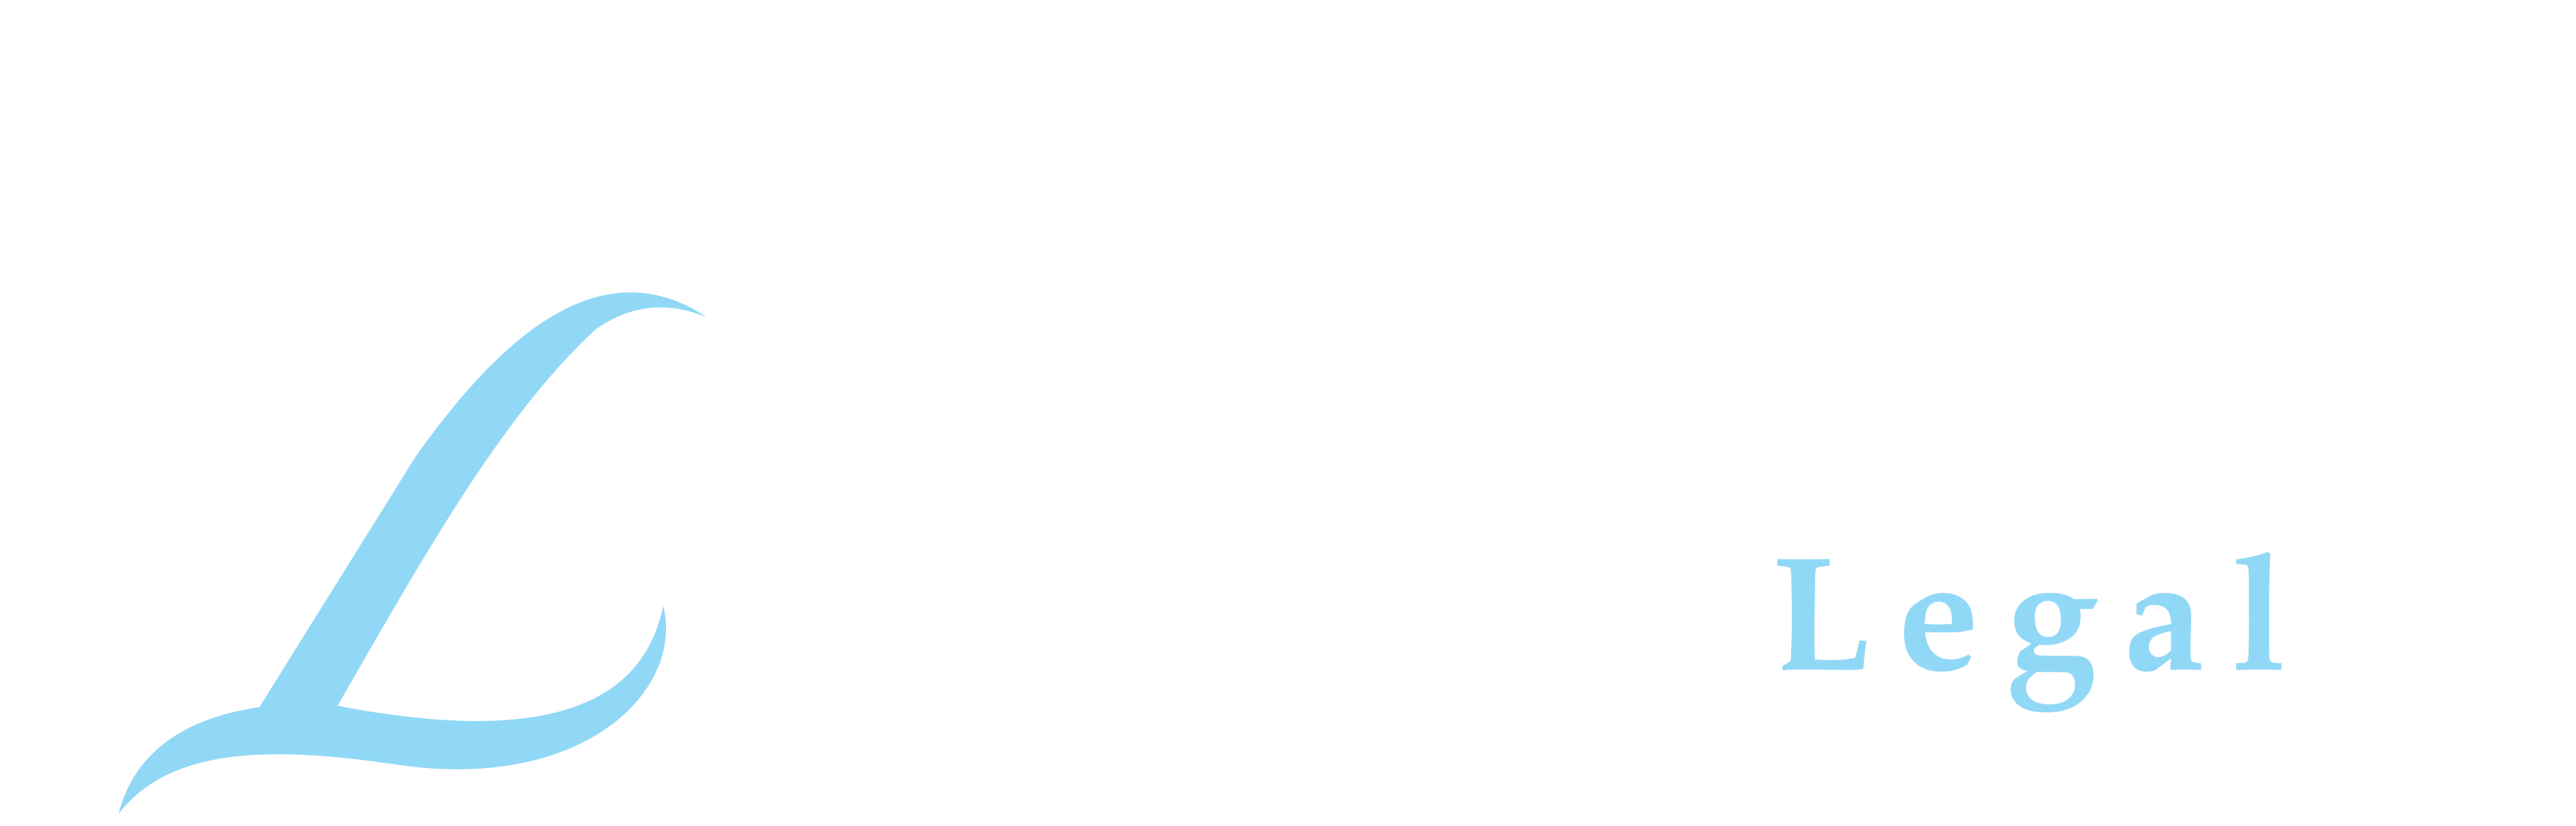 Berkeley Legal Logo